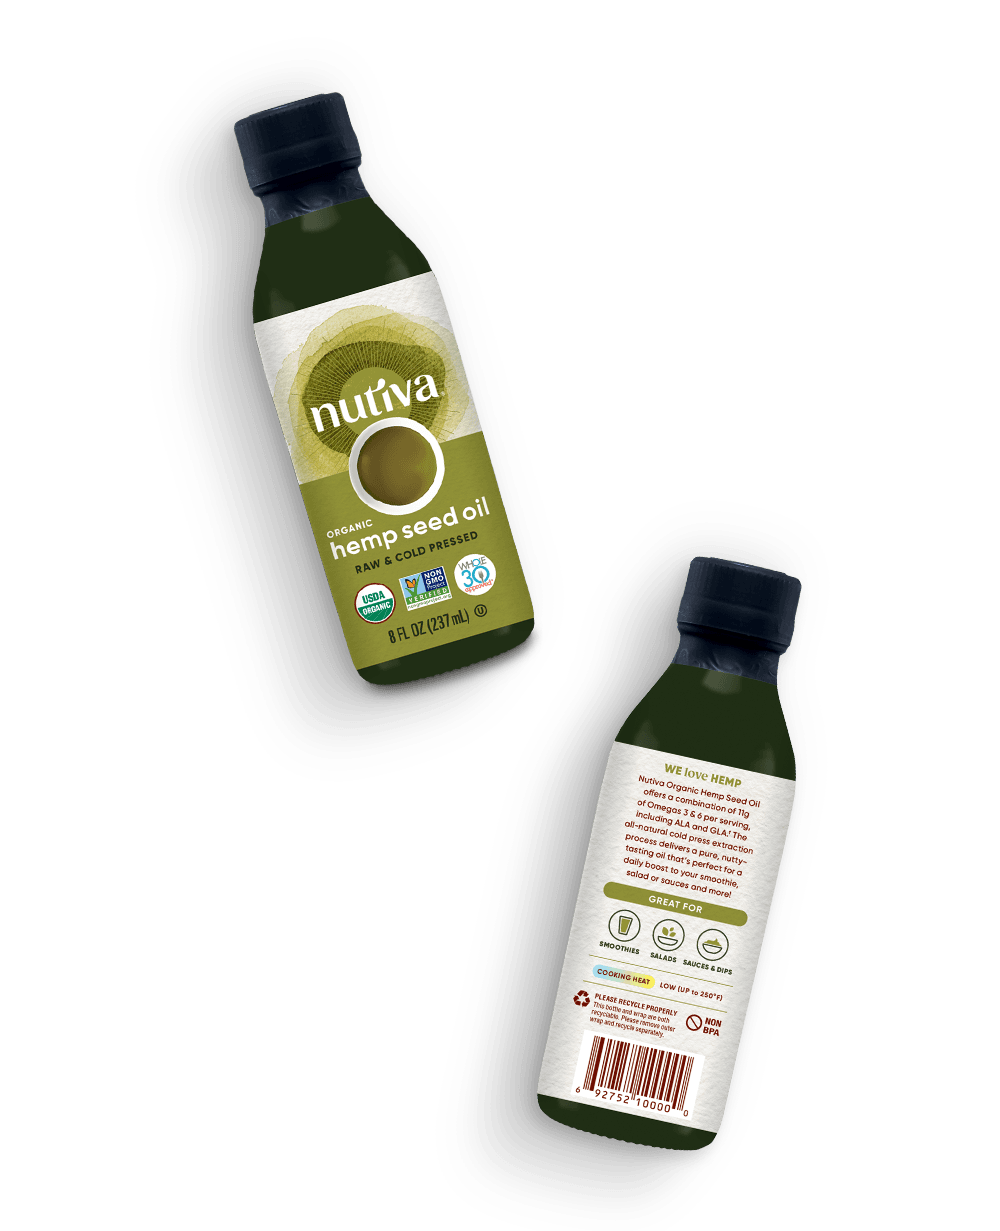 Velona Palm Kernel Oil USDA Certified Organic Refined, Cold Pressed